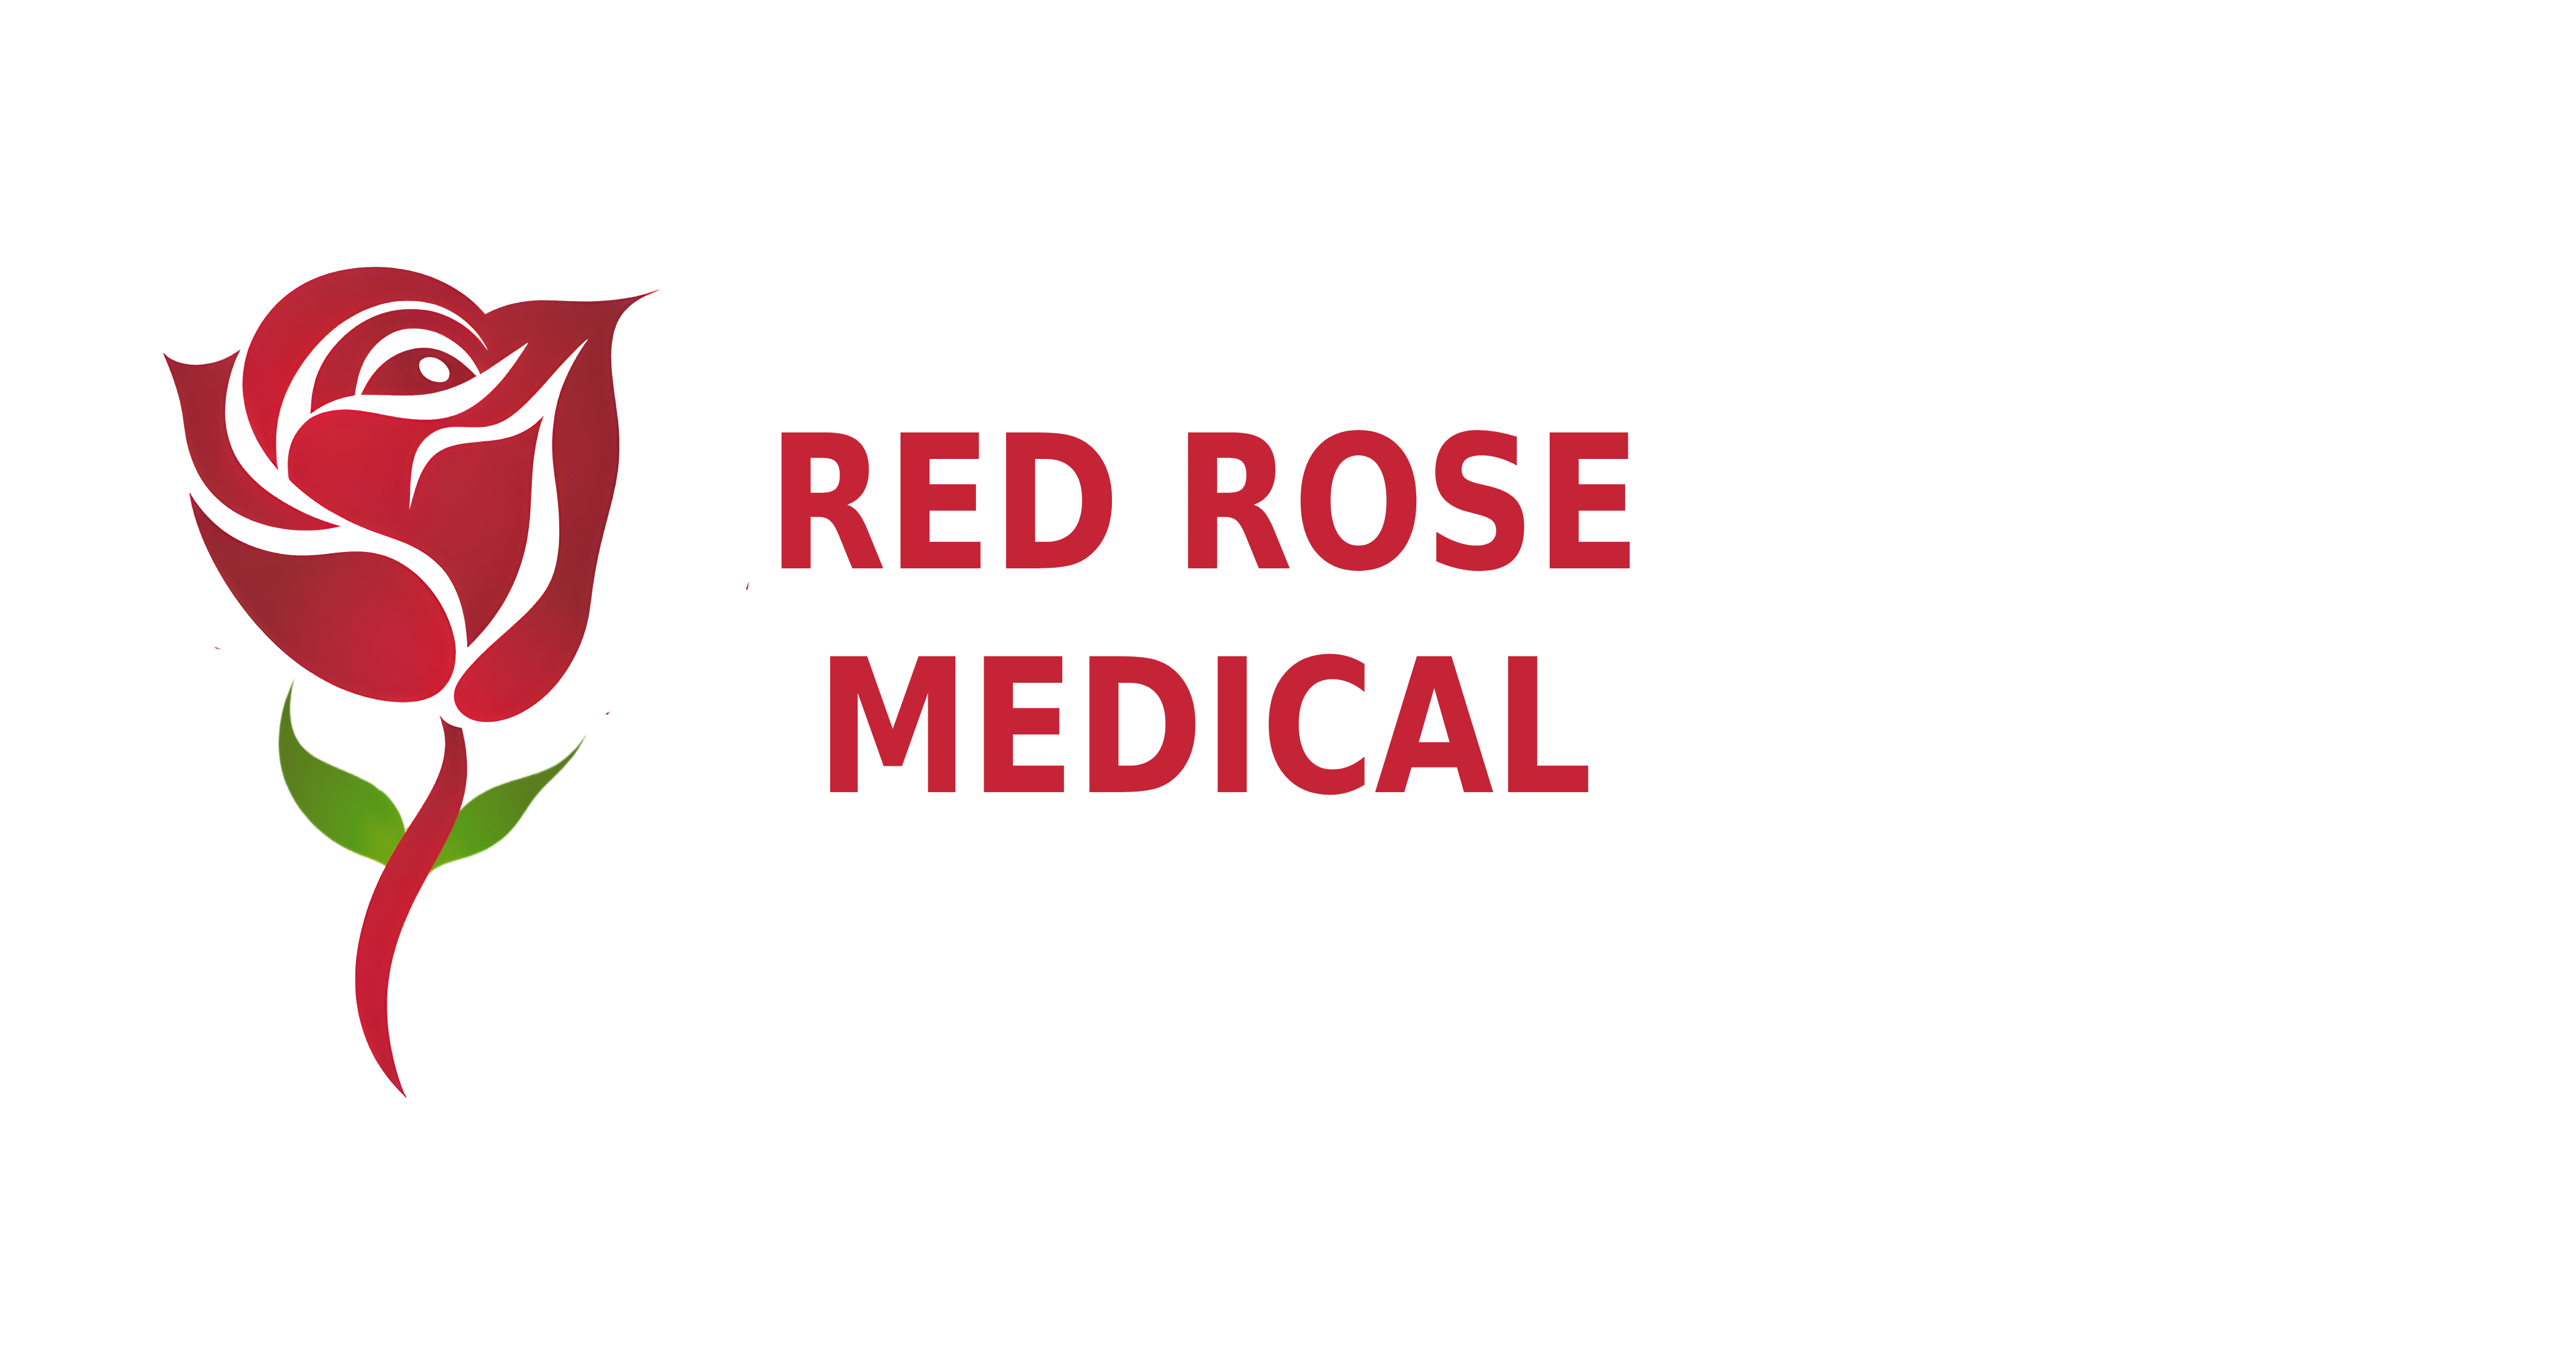 Redrose medical logo